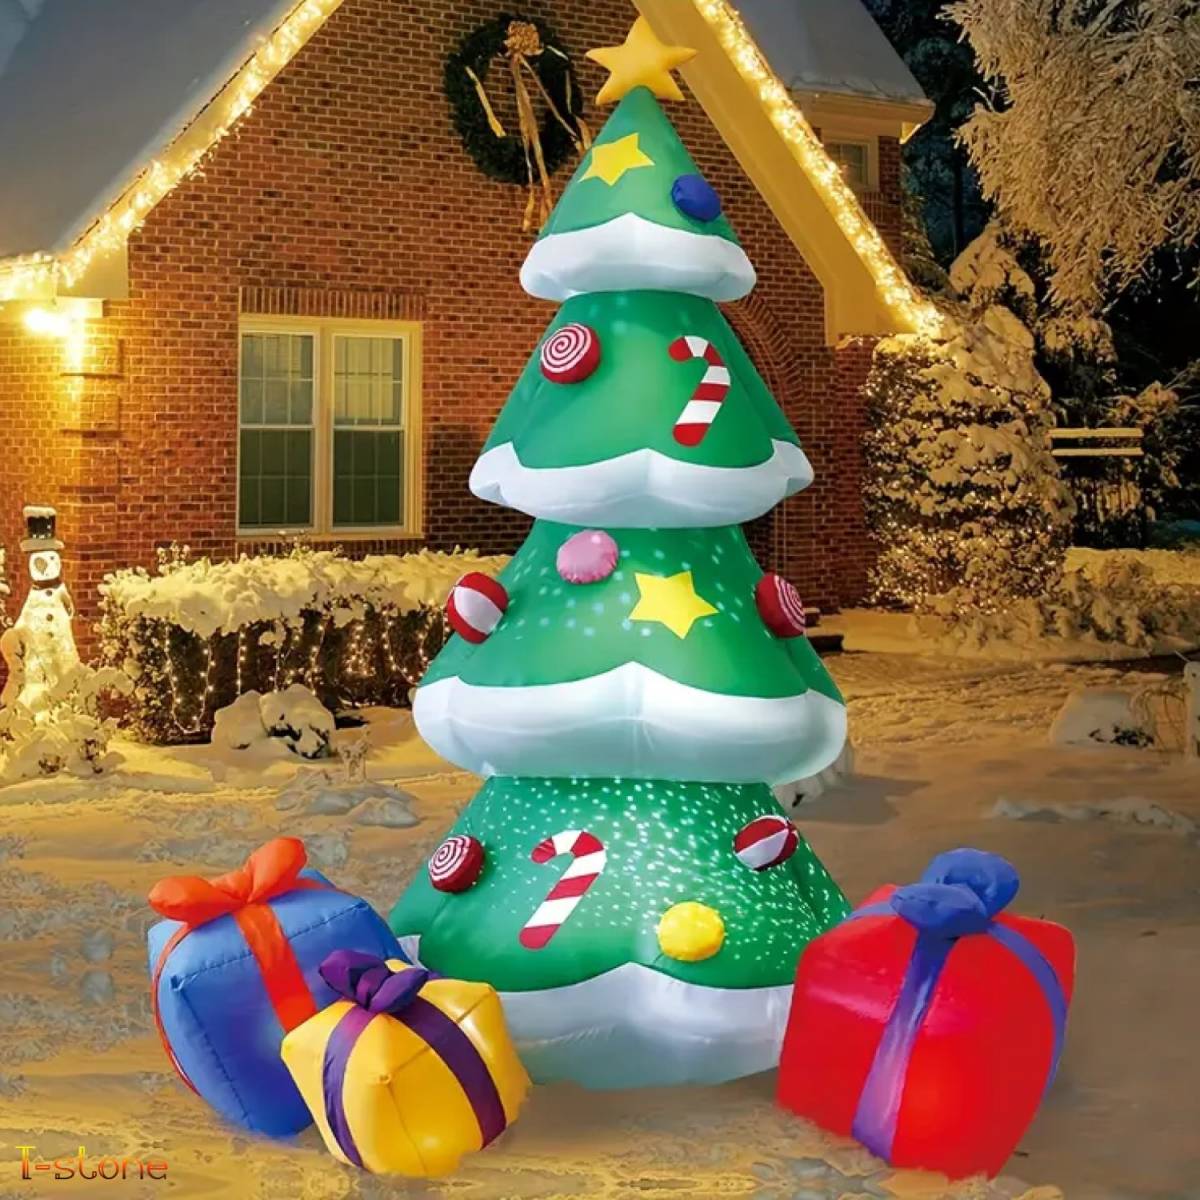  air ba Rune Christmas tree . present high luminance LED internal organs inflatable Event decoration presence eminent garden garden party atmosphere making 